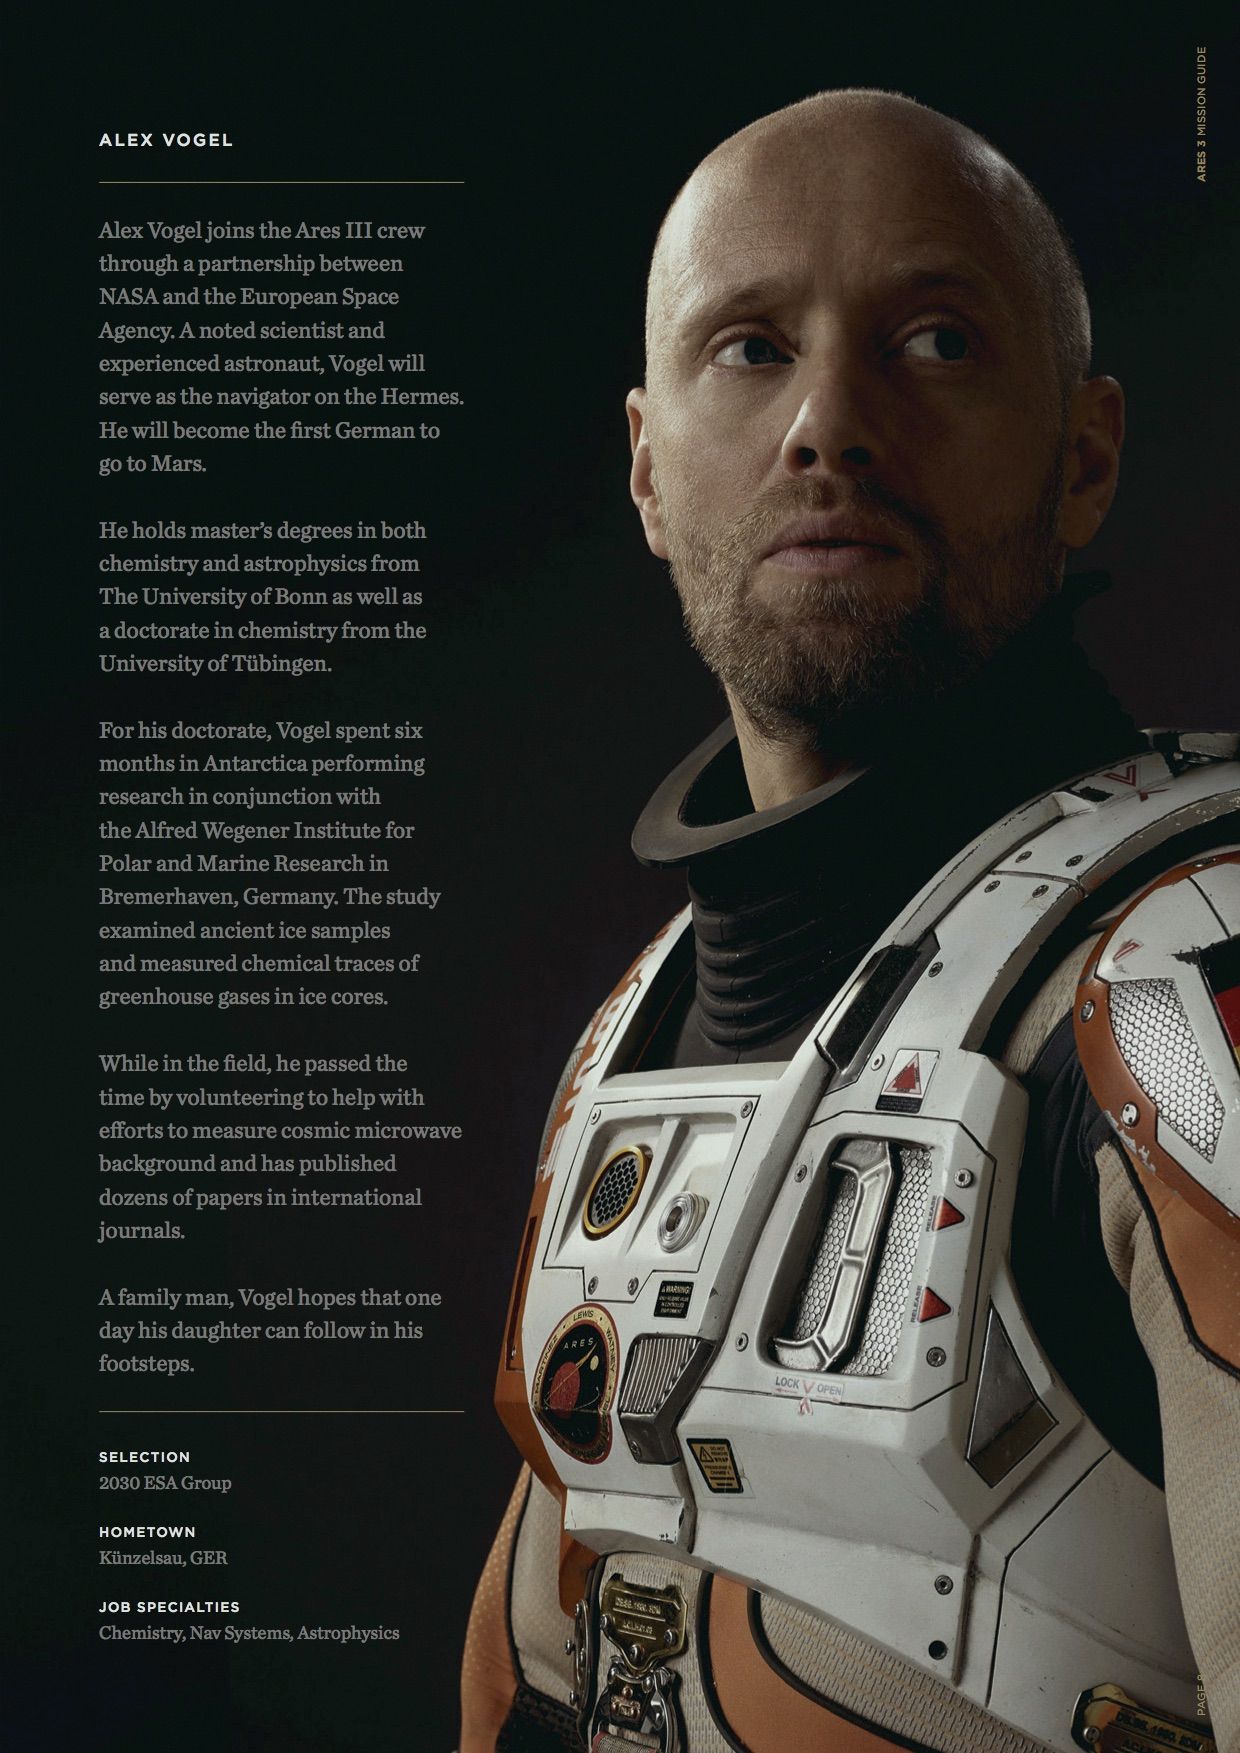 The Martian Mission Guide Biography Alex Vogel